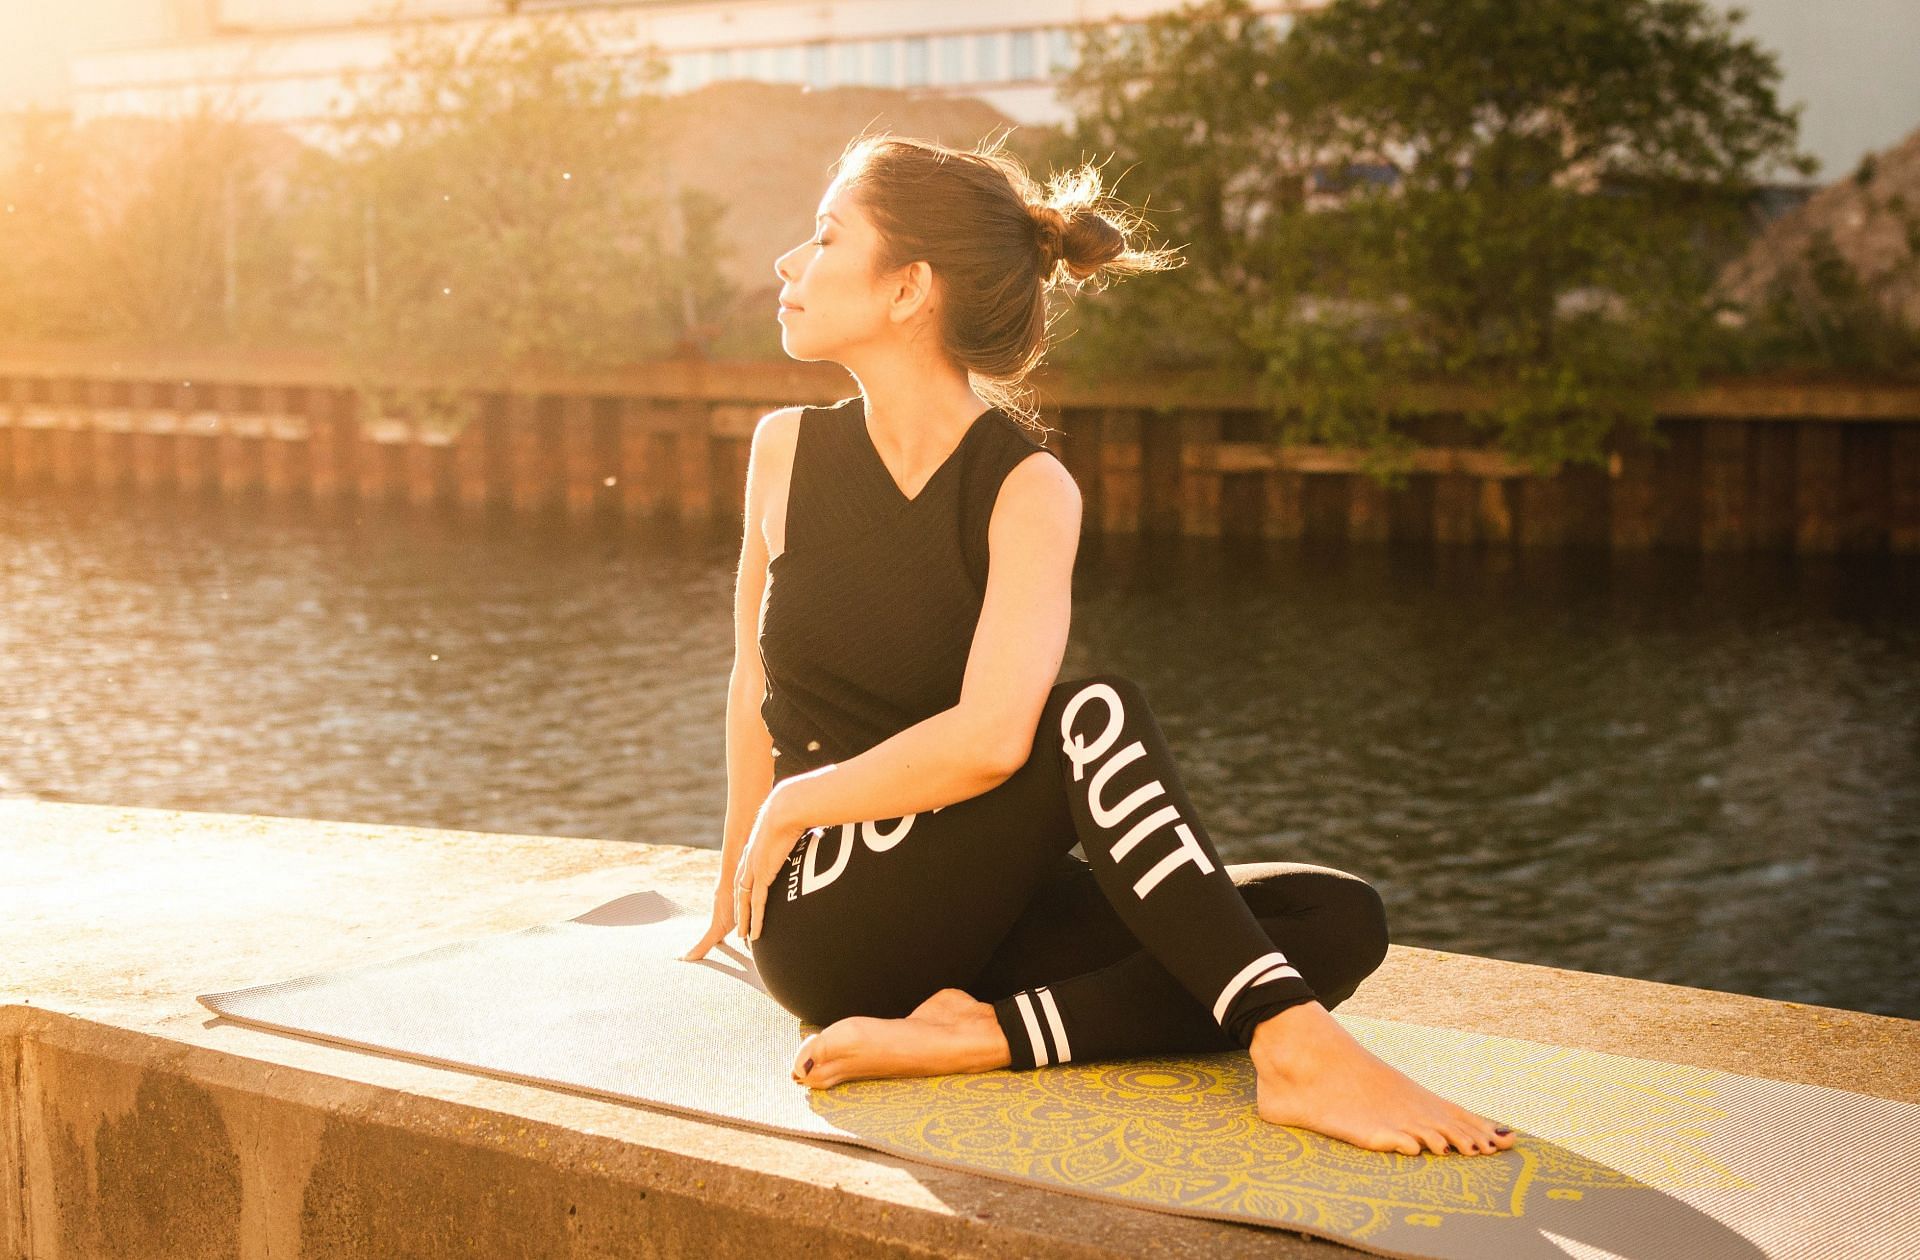 Yoga practice helps in calming mind. (Image via Pexels/ Max Nikhil Thimmayya)